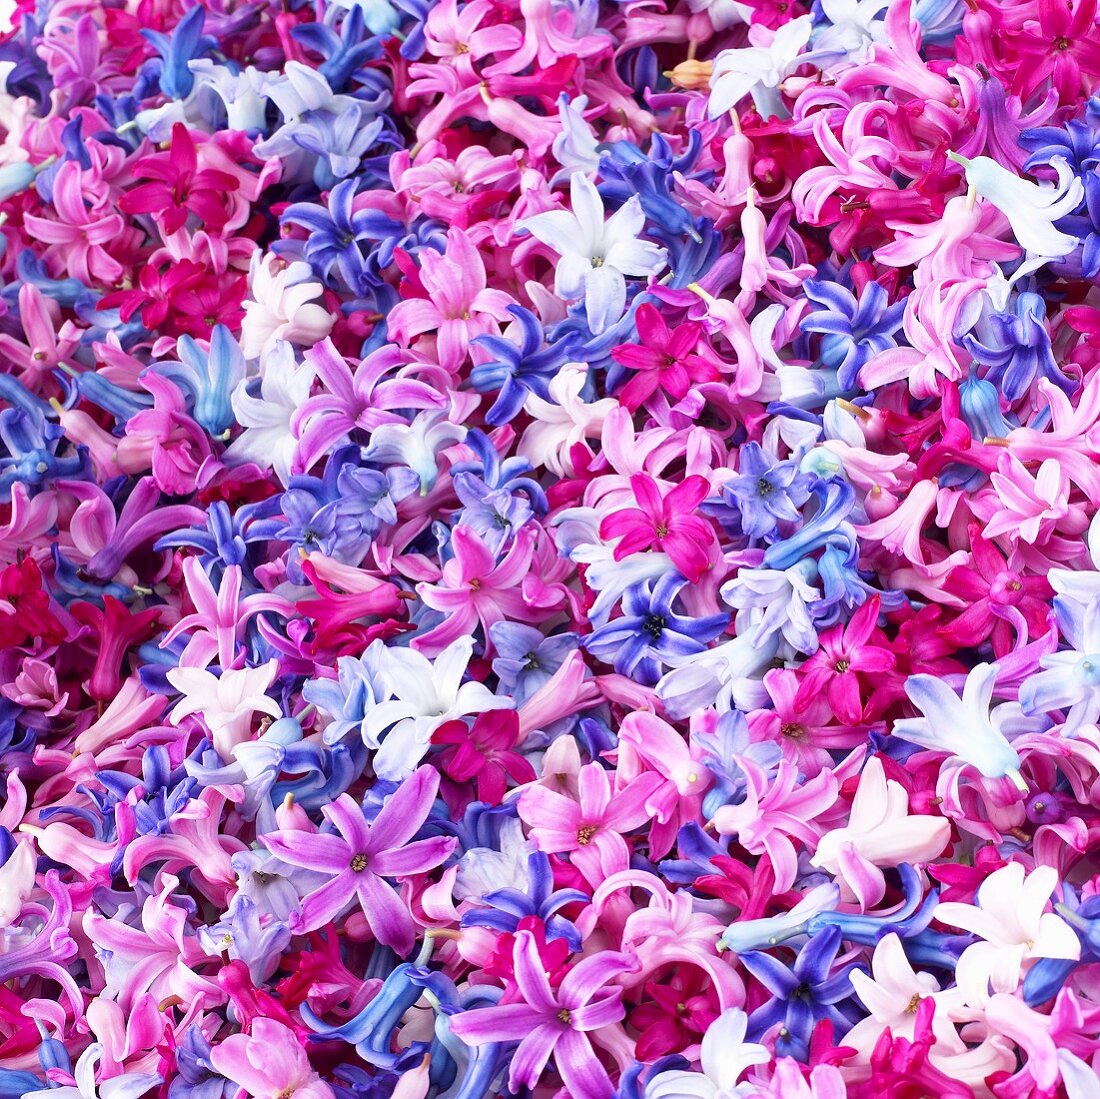 Many hyacinth flowers